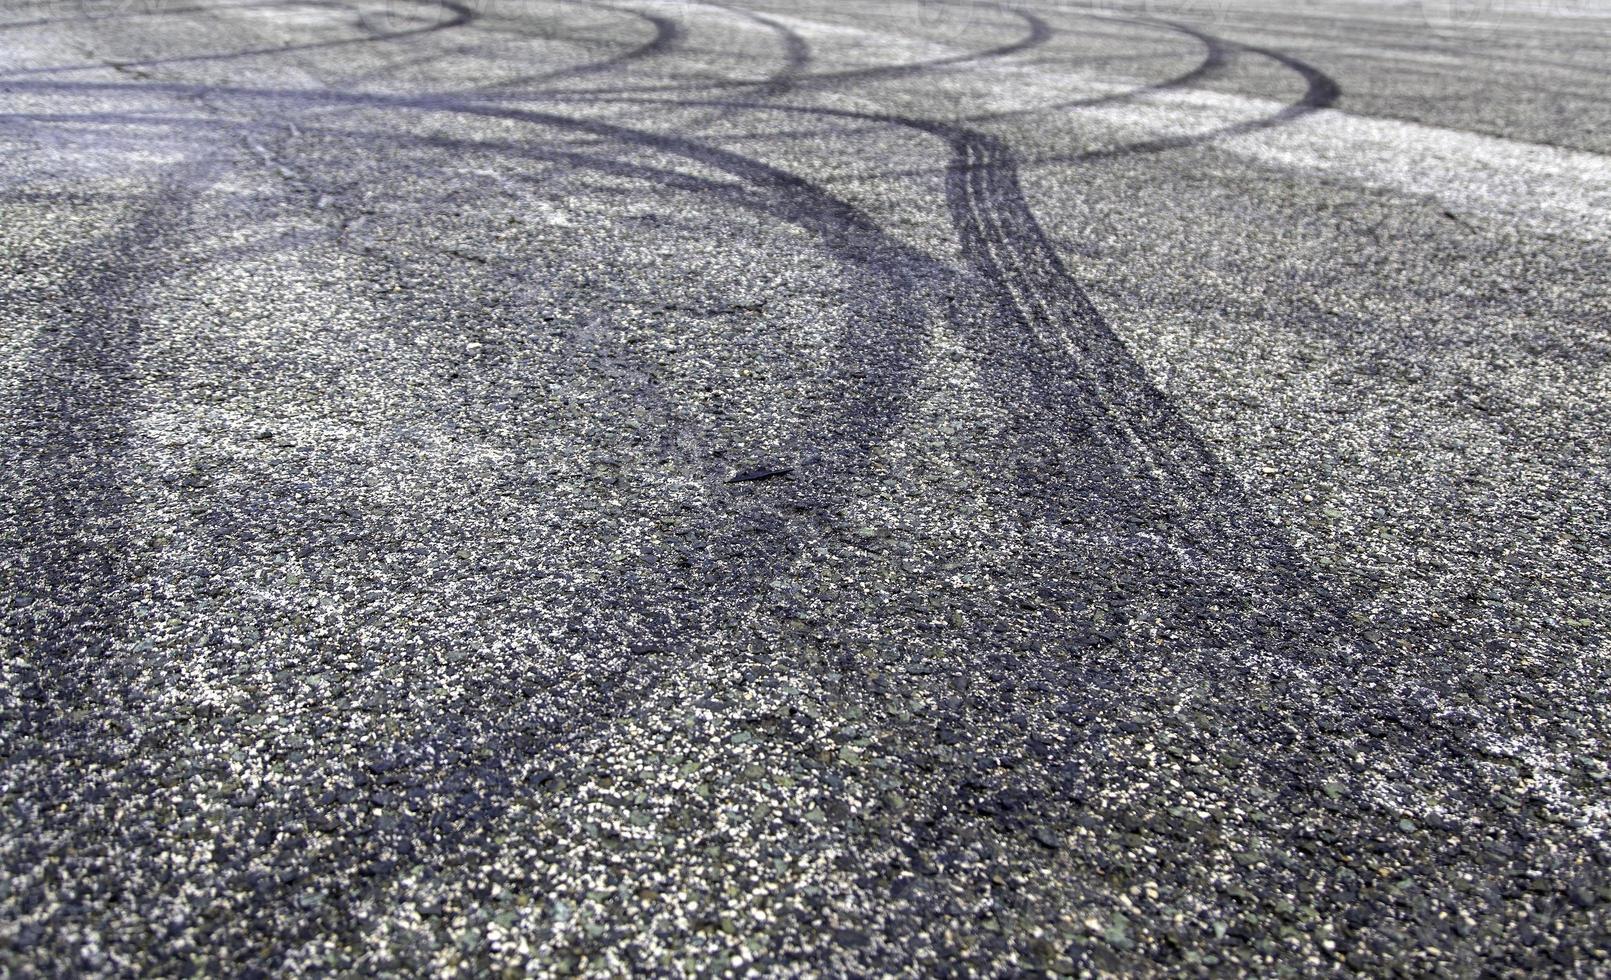 Skid marks on the asphalt photo